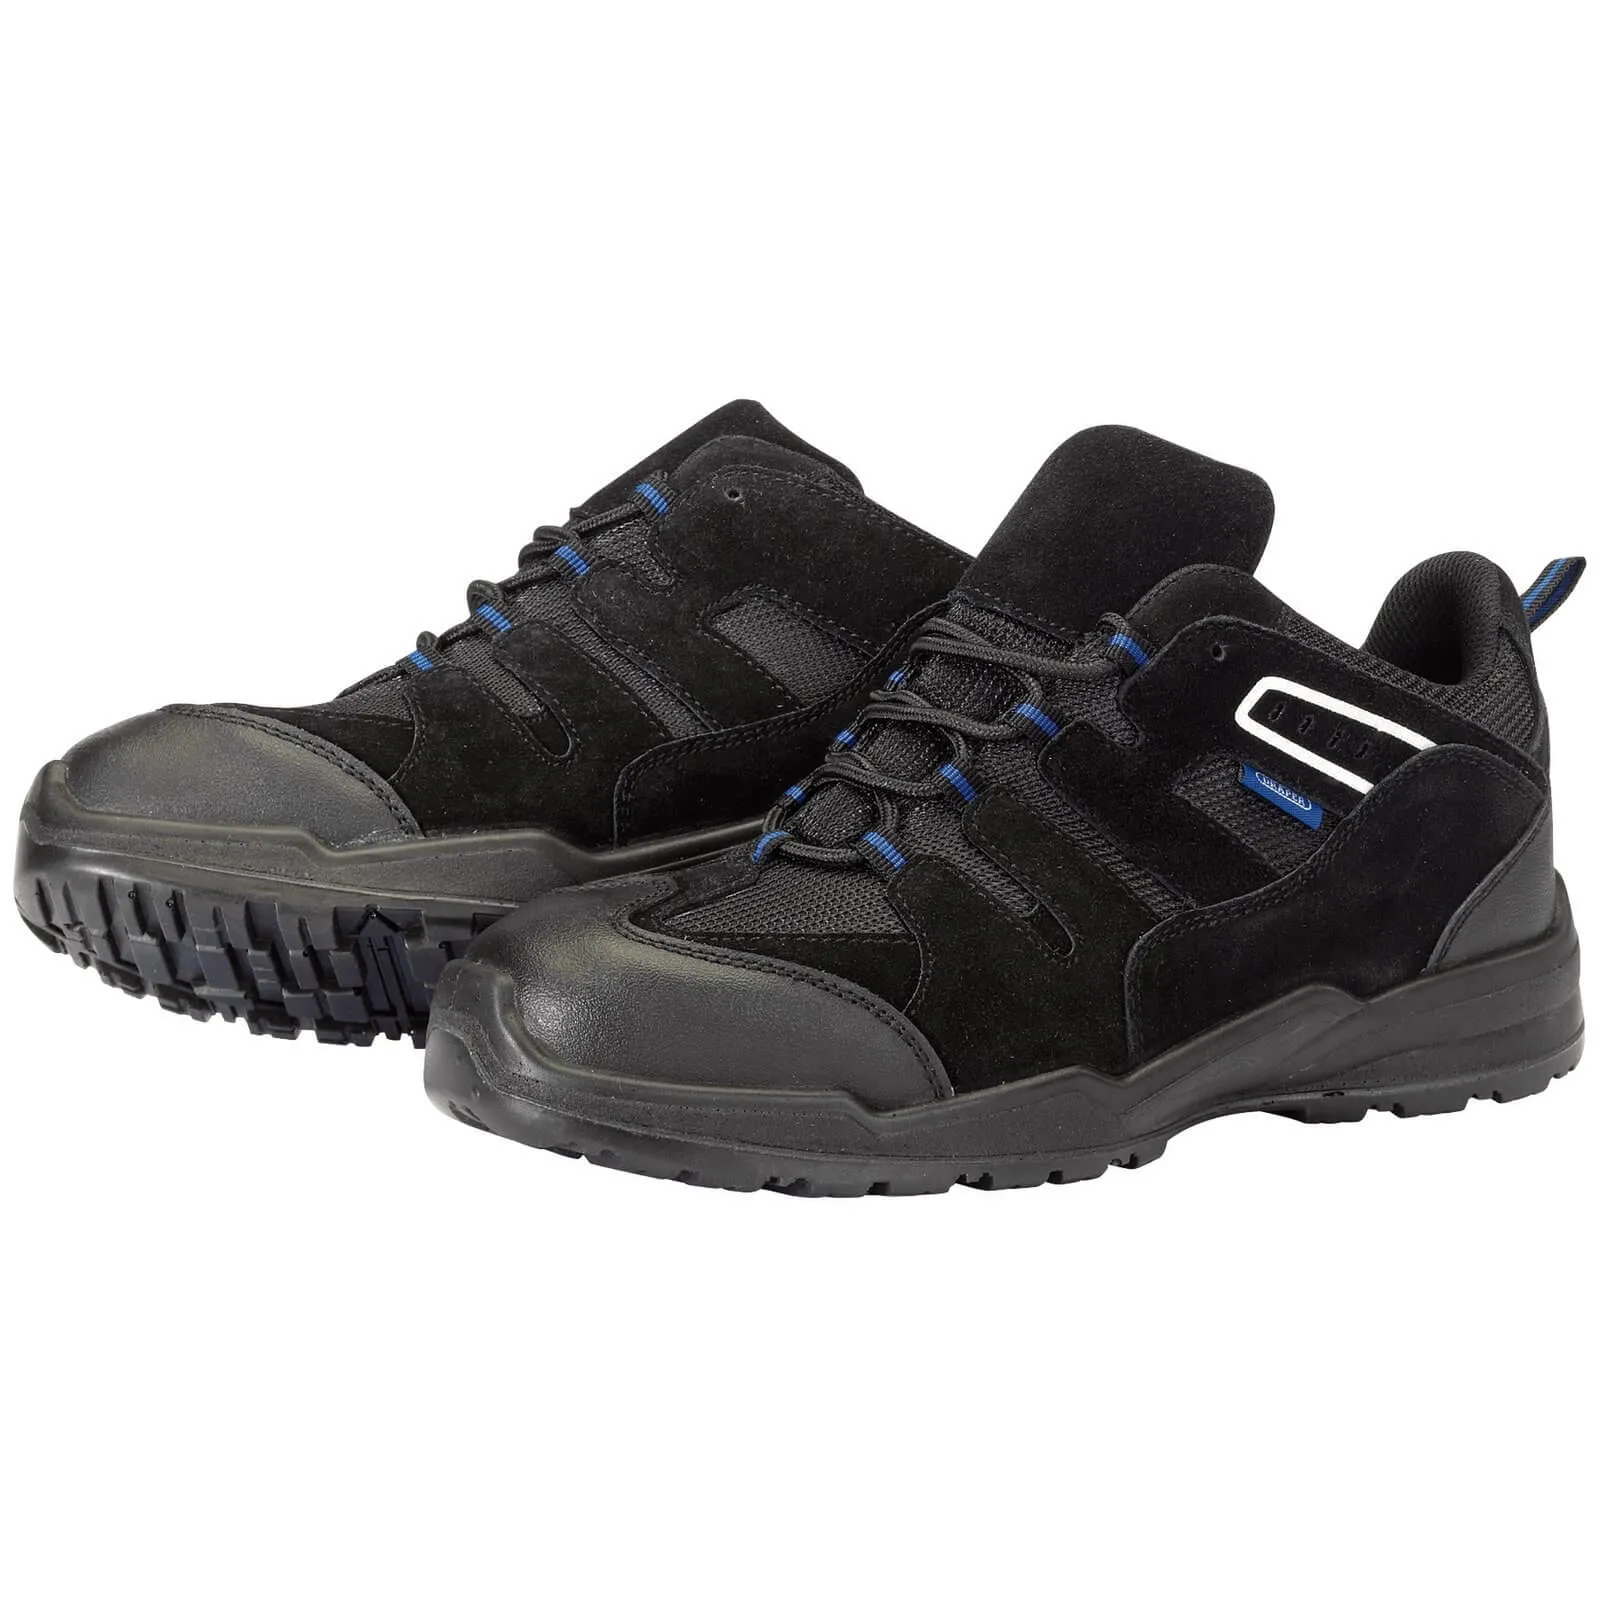 Draper Trainer Style Safety Shoe - Black, Size 12